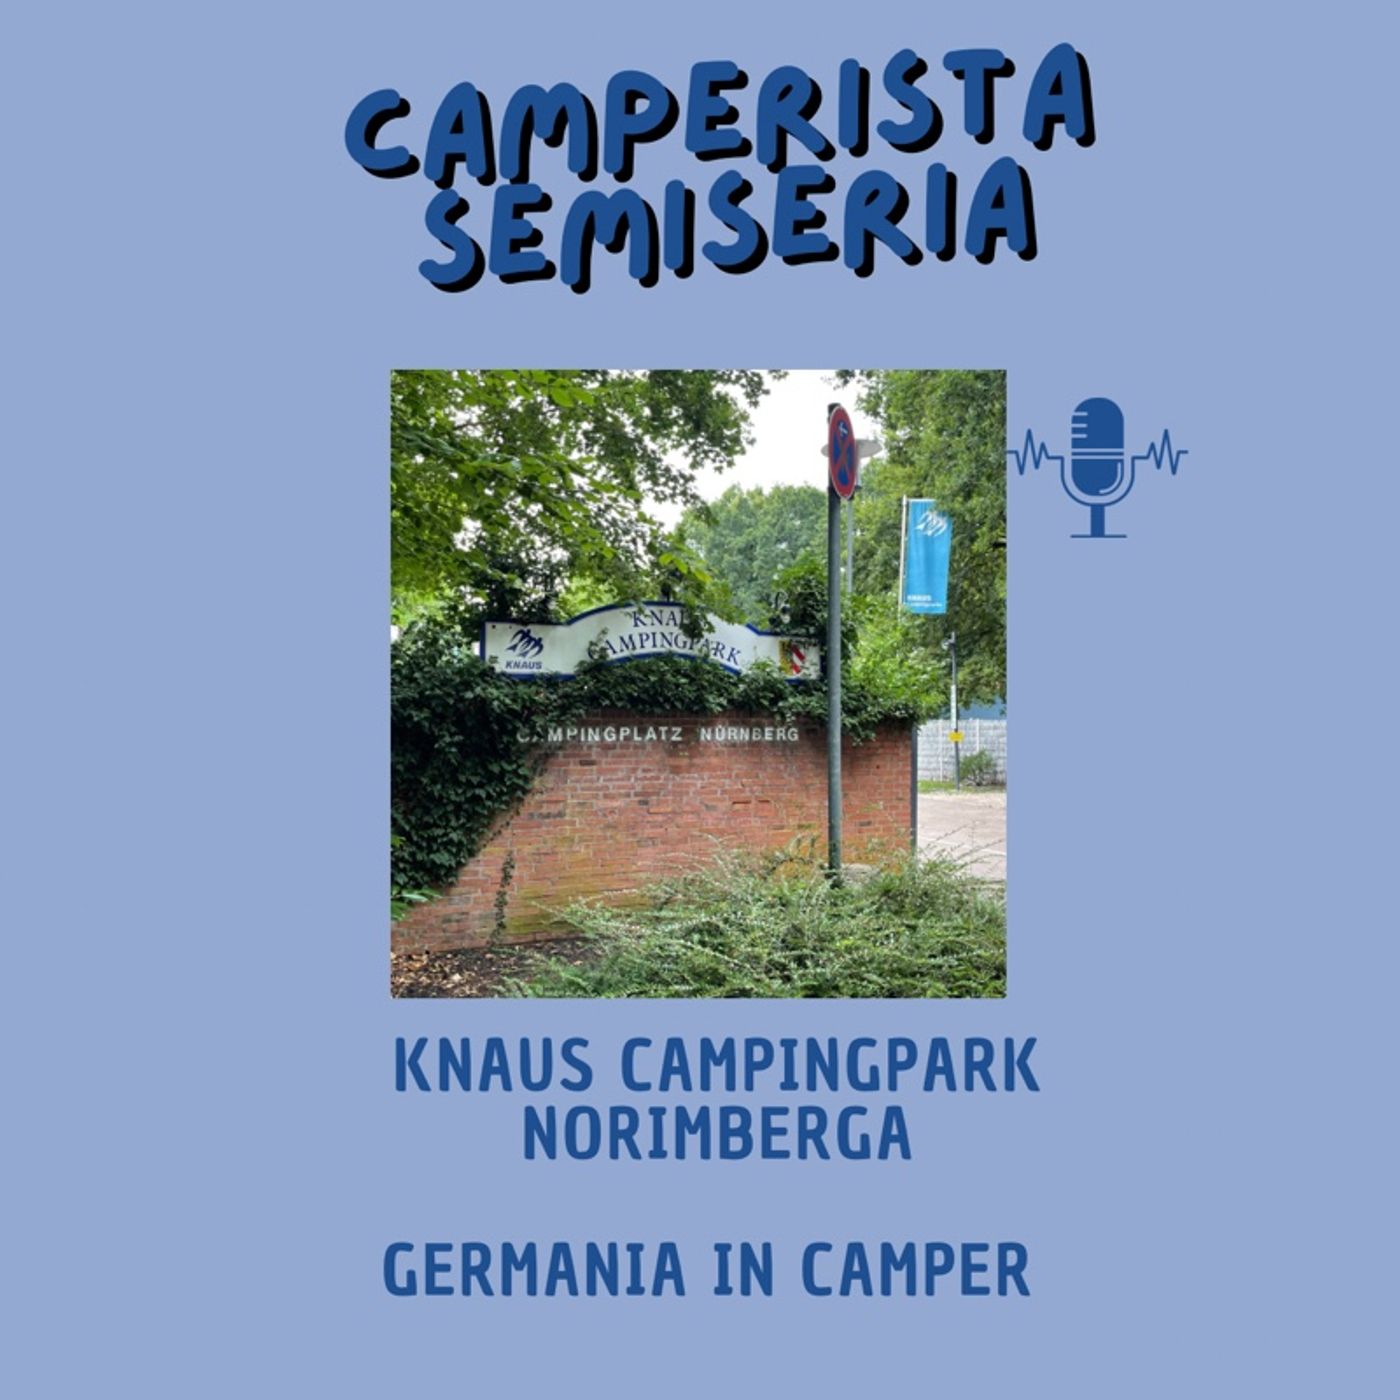 Knaus CampingPark Norimberga - Camperistasemiseria